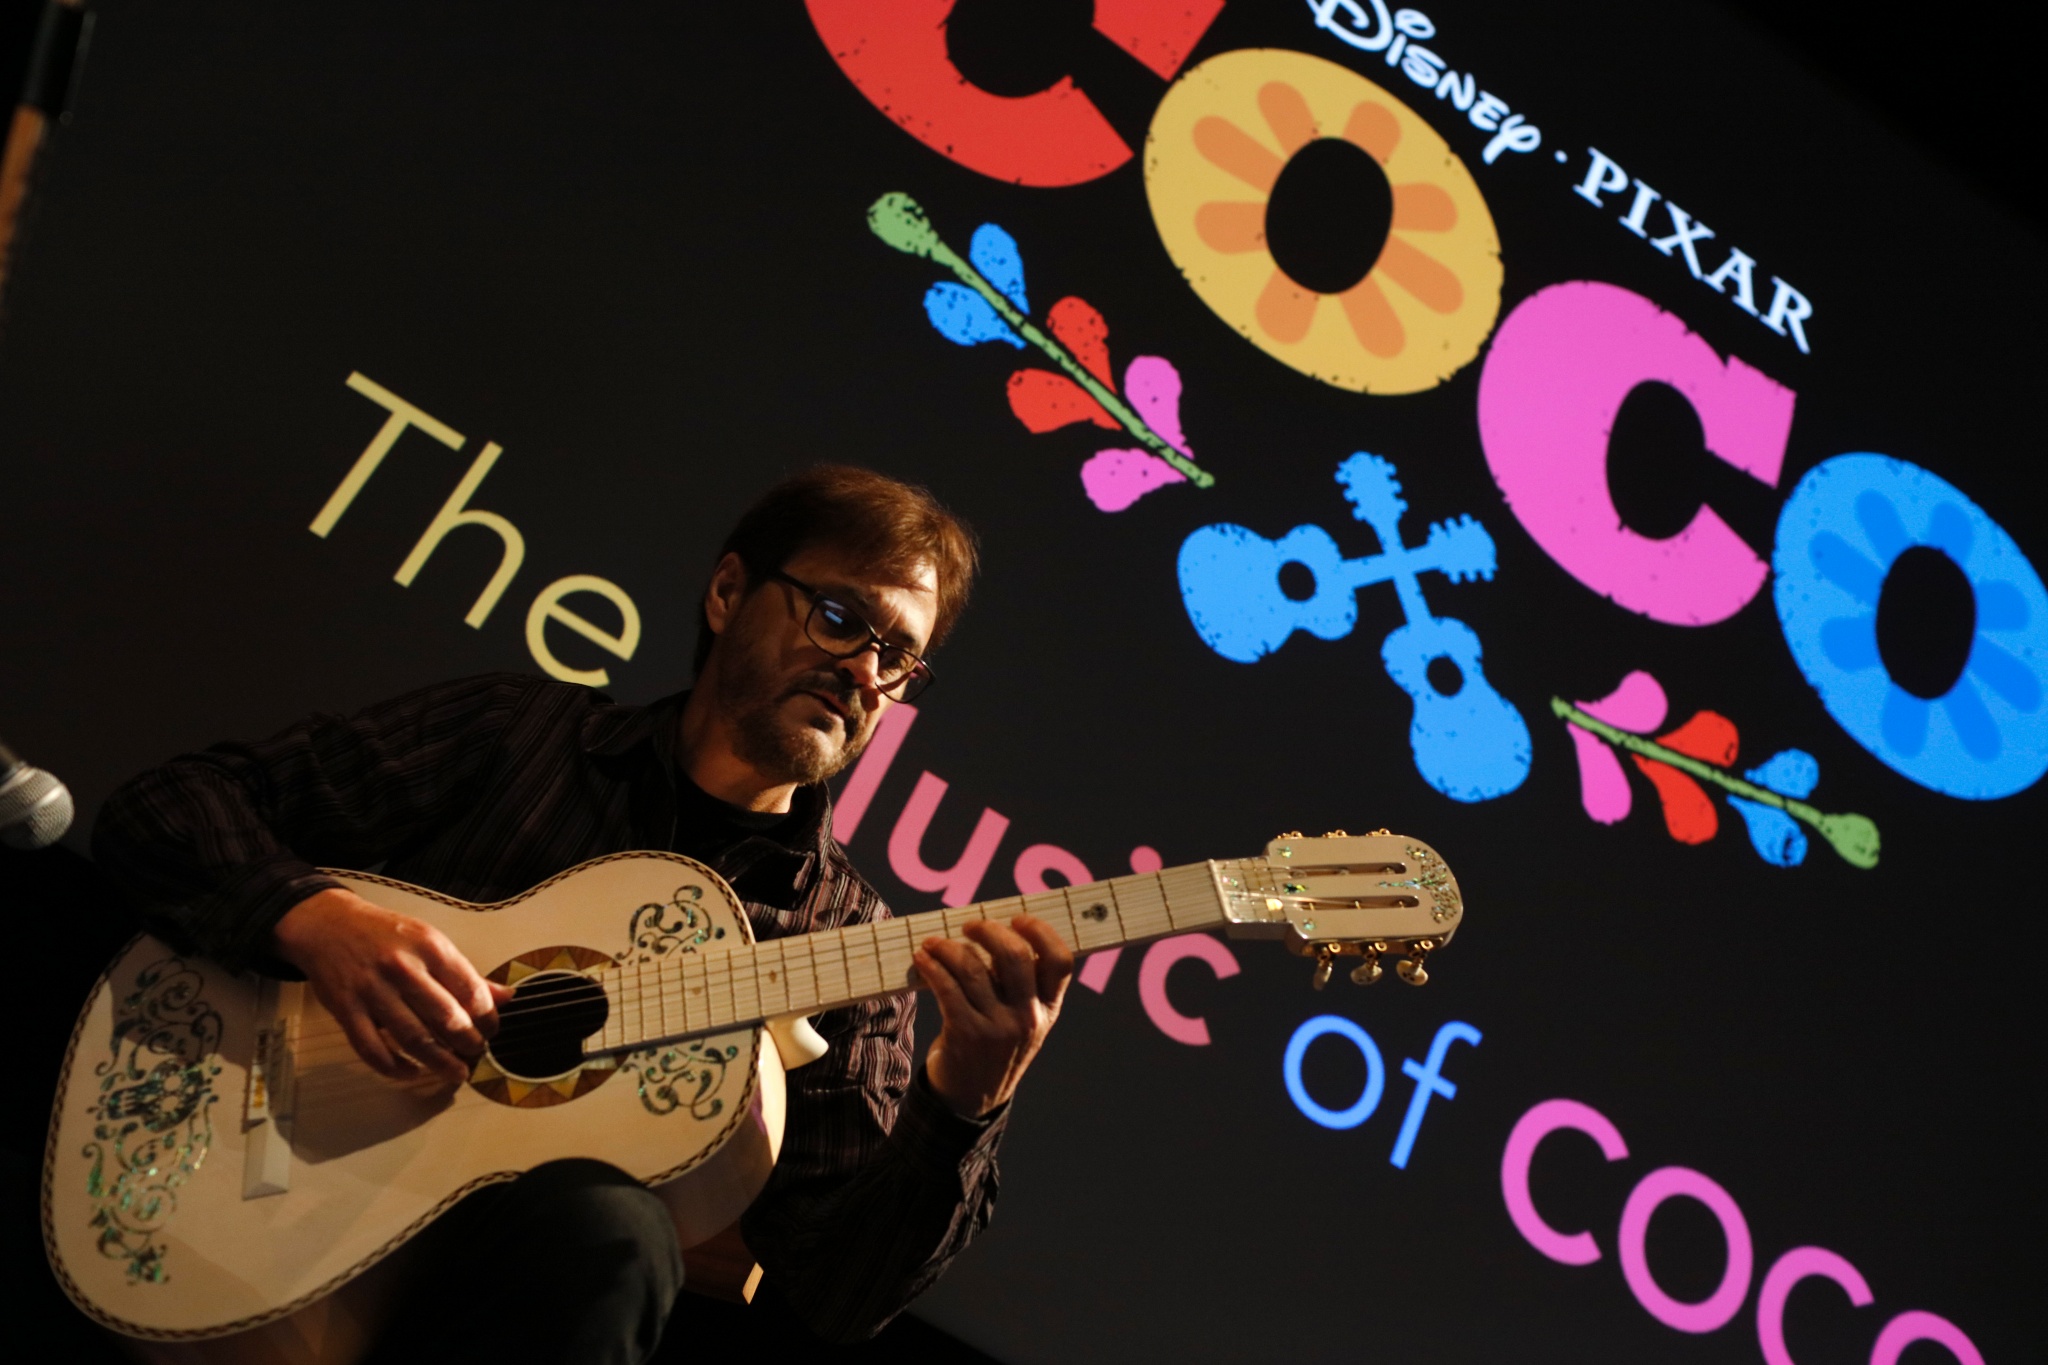 Pixar Coco Guitar